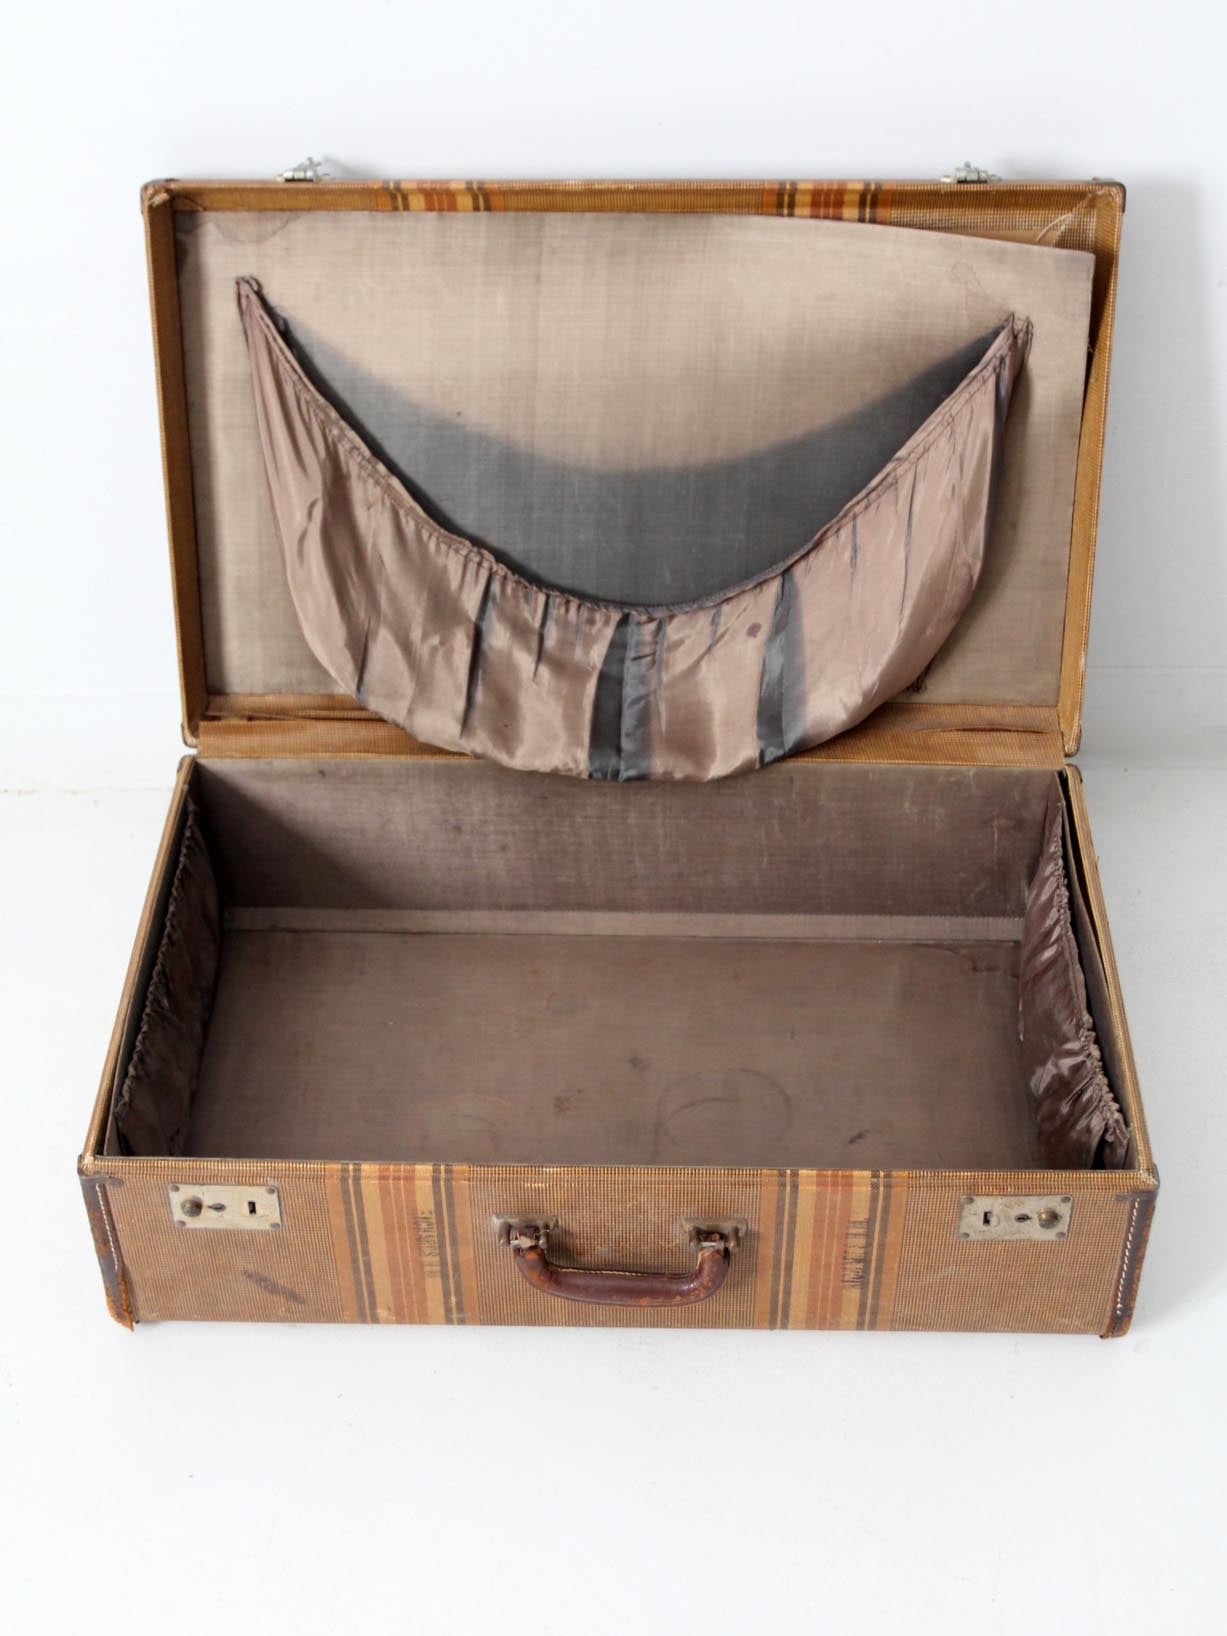 Vintage FRENCH COMPANY Black & Grey PINSTRIPE Suitcase Luggage 